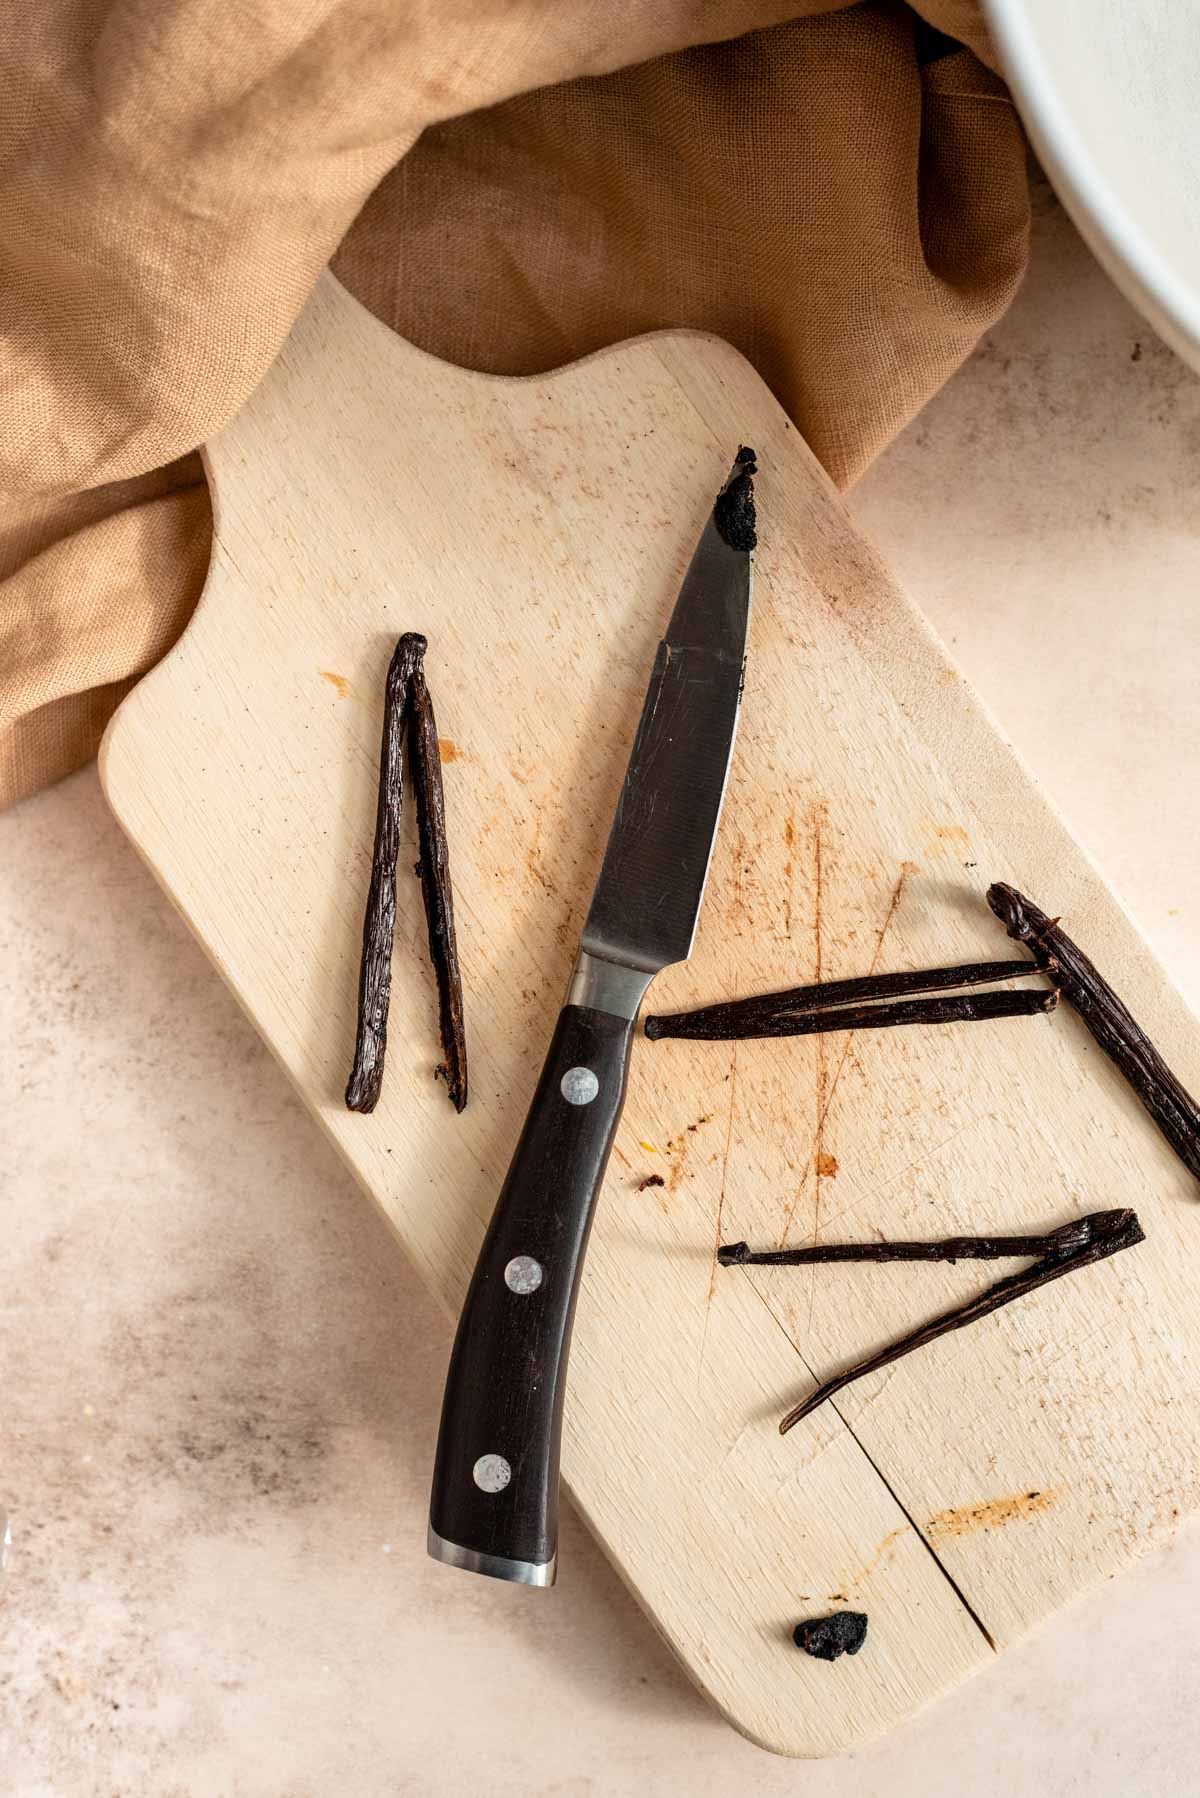 Sliced vanilla pods on a wood cutting board.